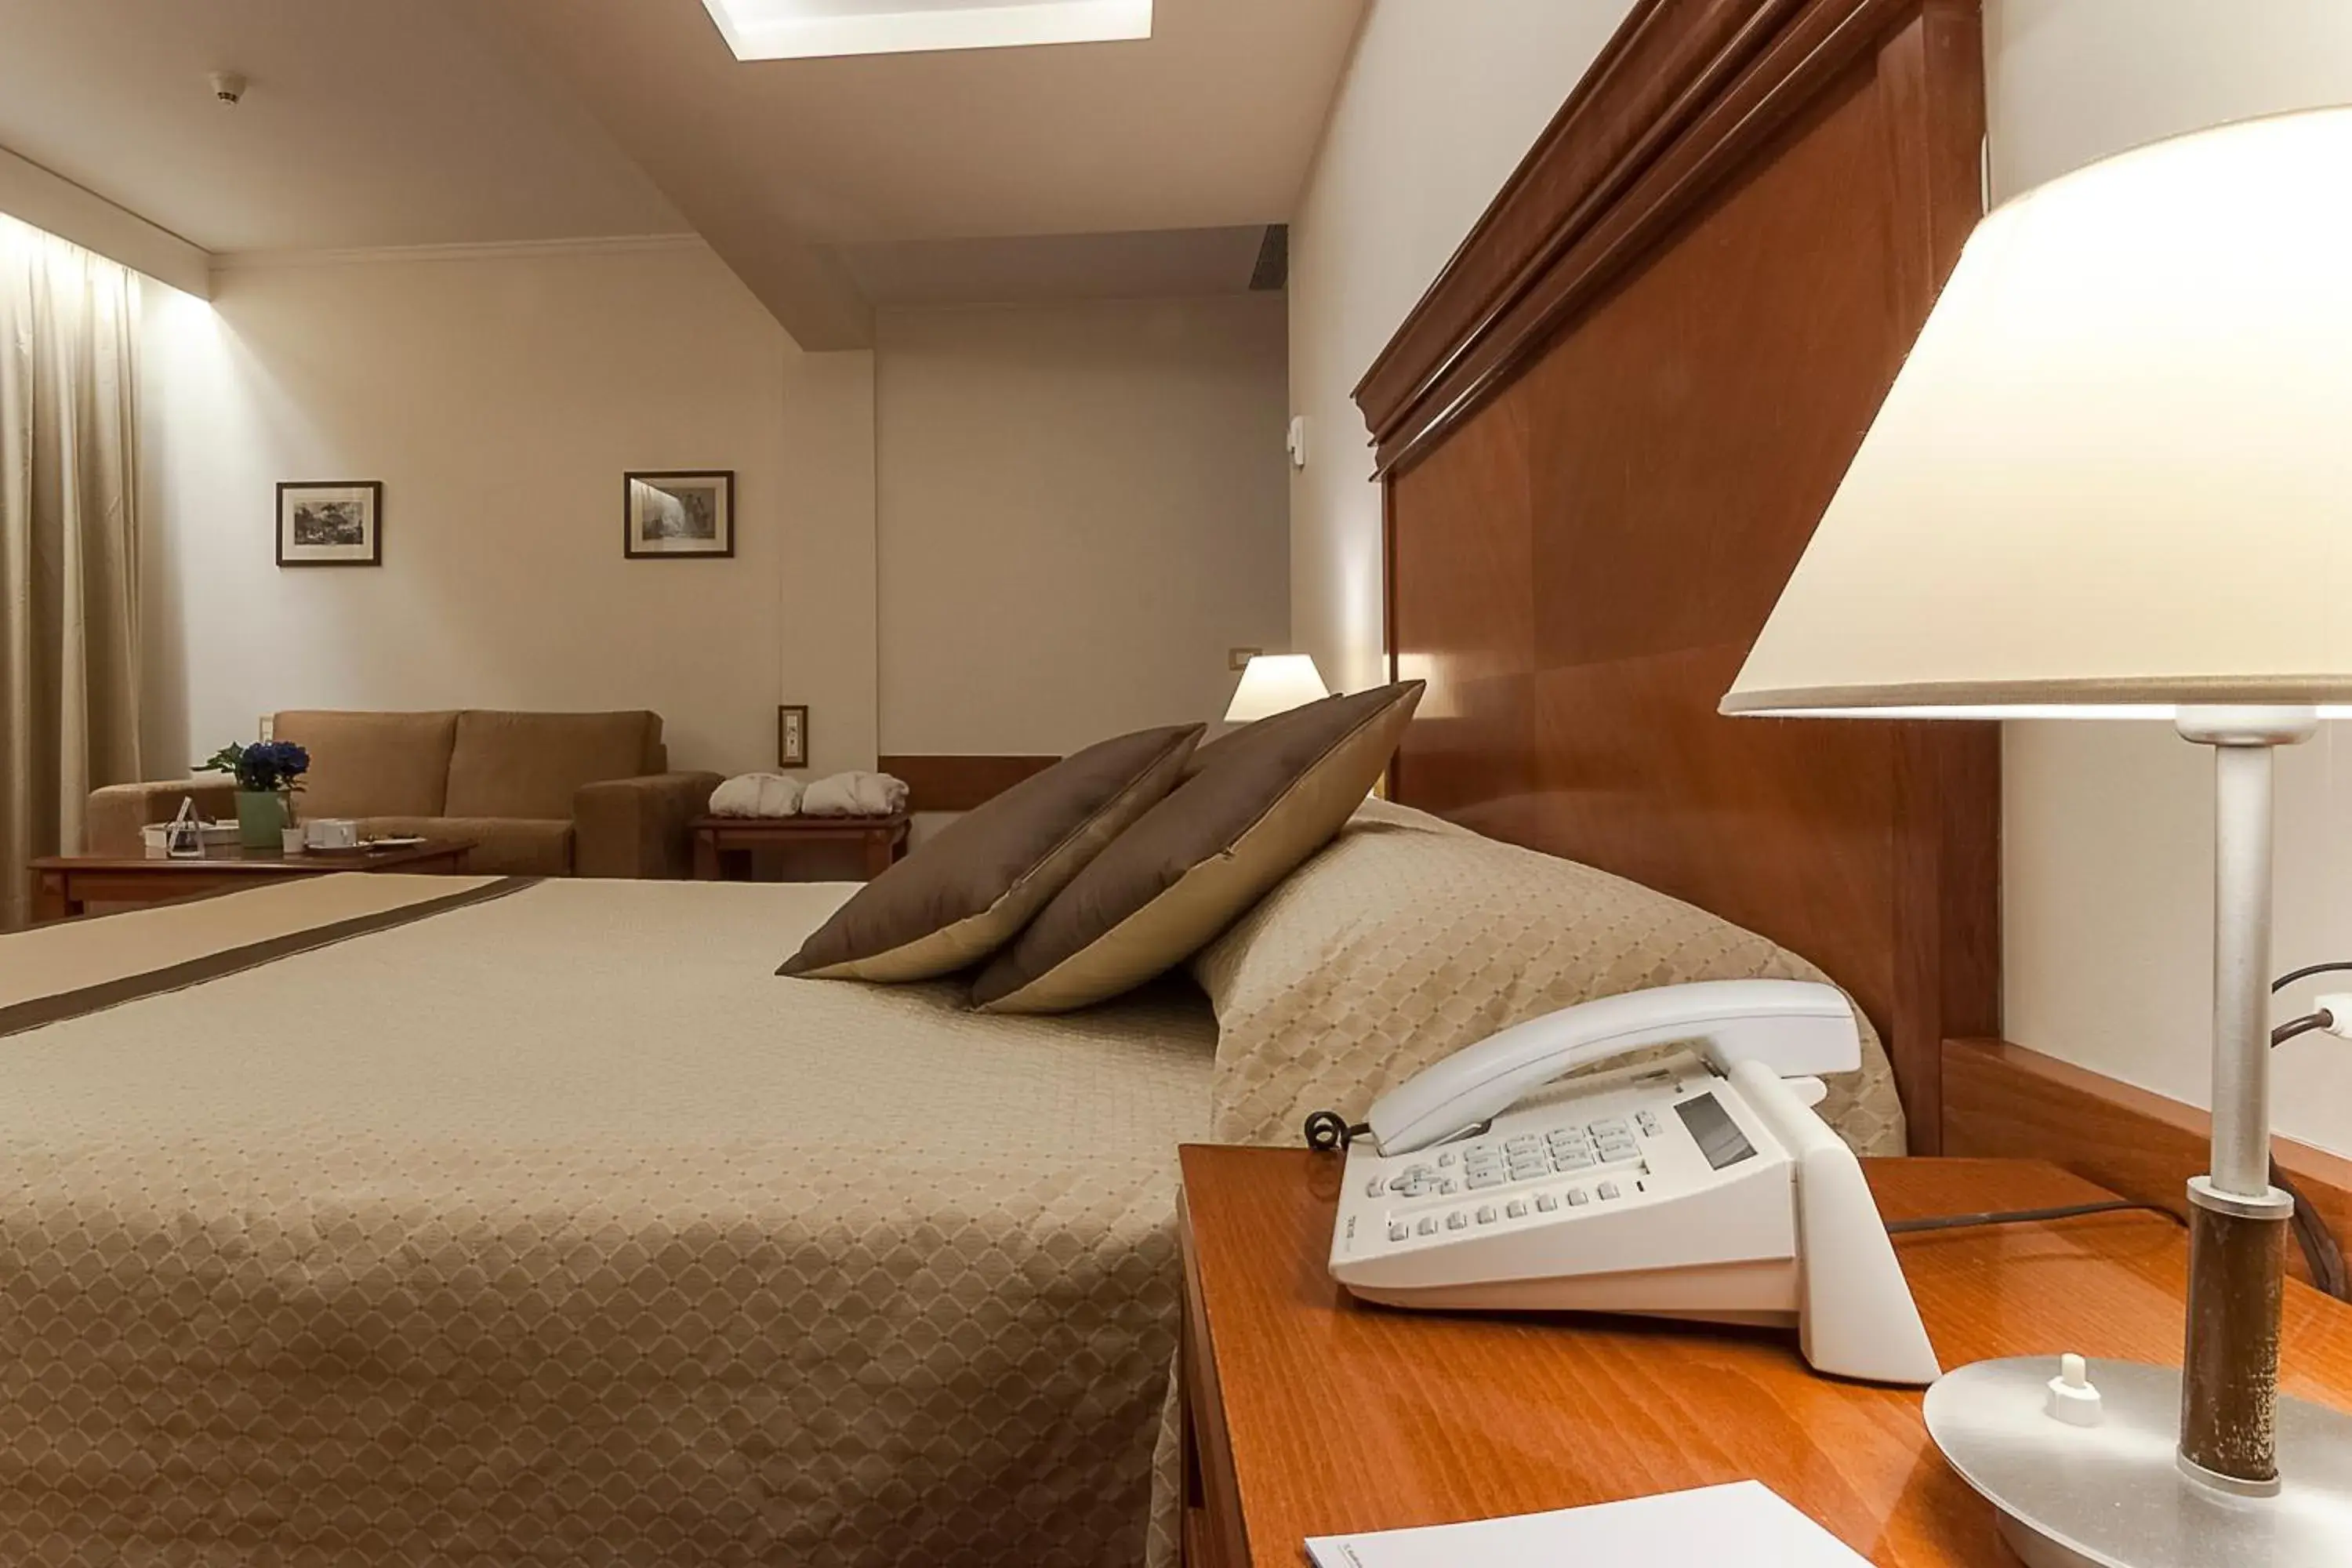 Bed, Room Photo in Ilissos